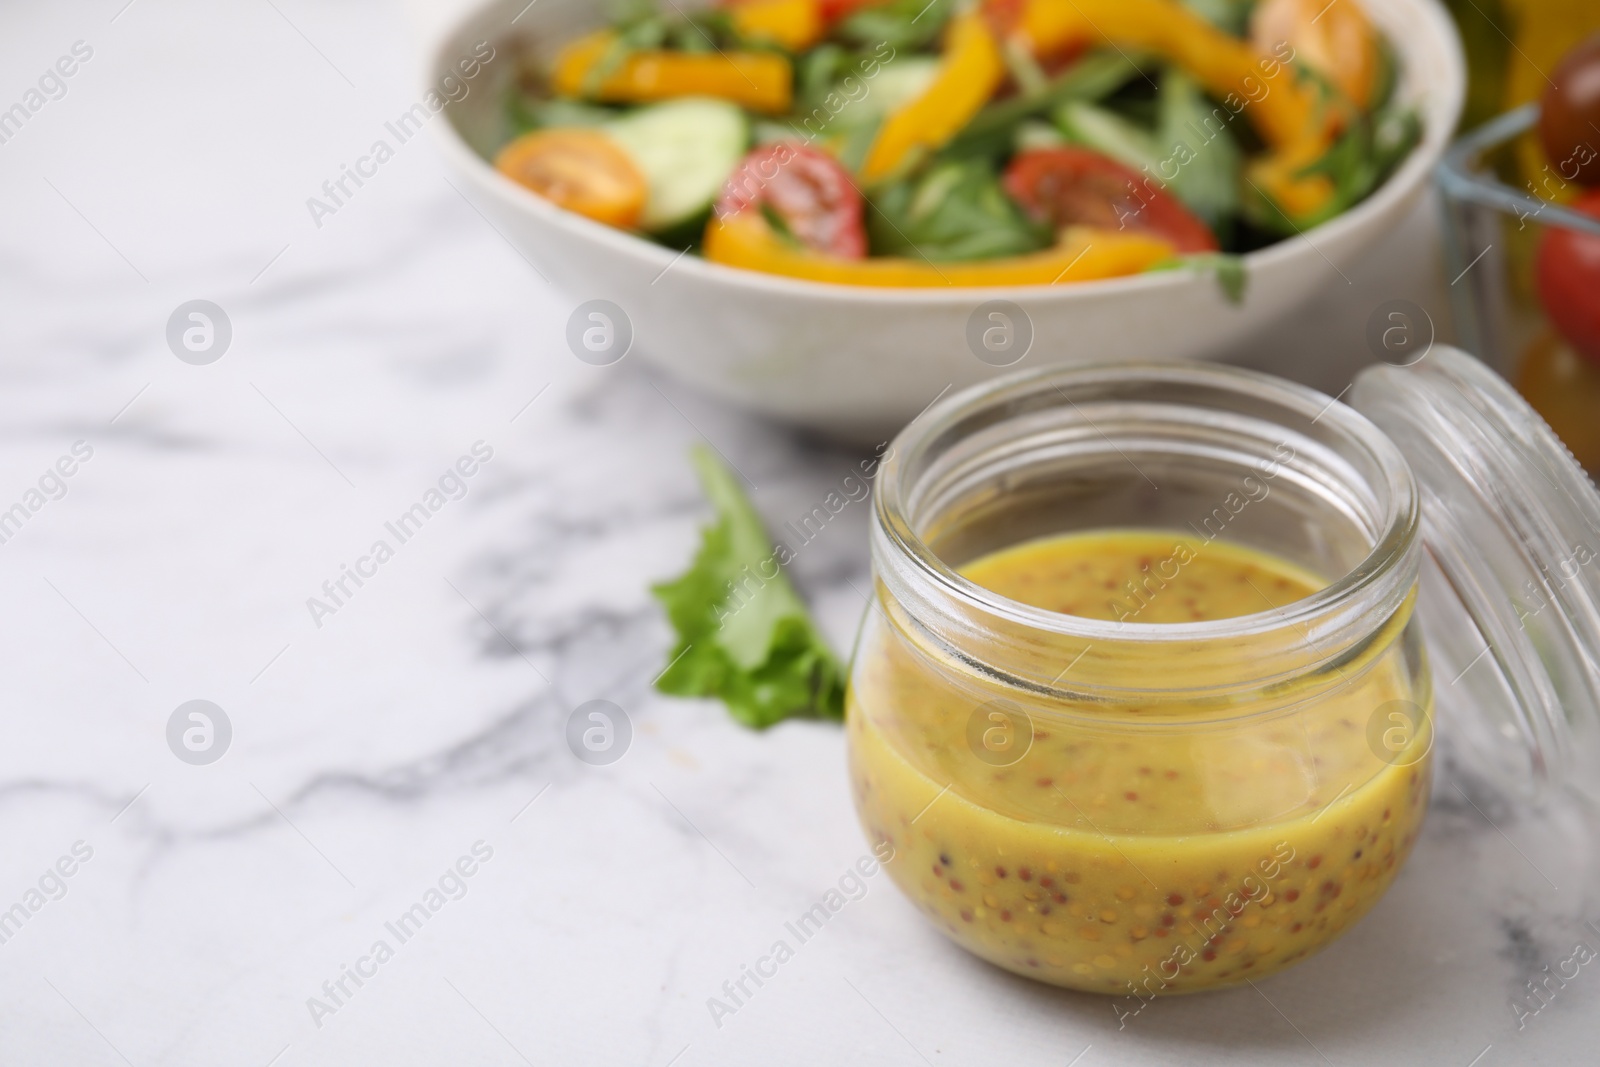 Photo of Tasty vinegar based sauce (Vinaigrette) in jar on white marble table, closeup. Space for text